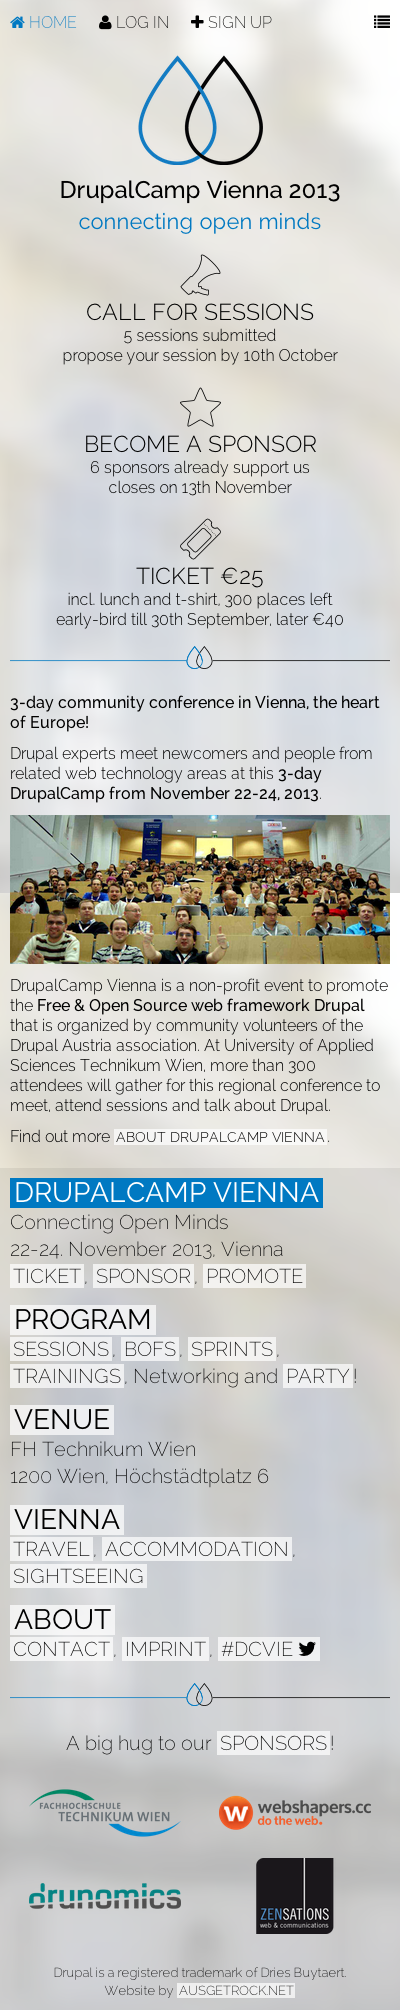 DrupalCamp Vienna - Connecting Open Minds